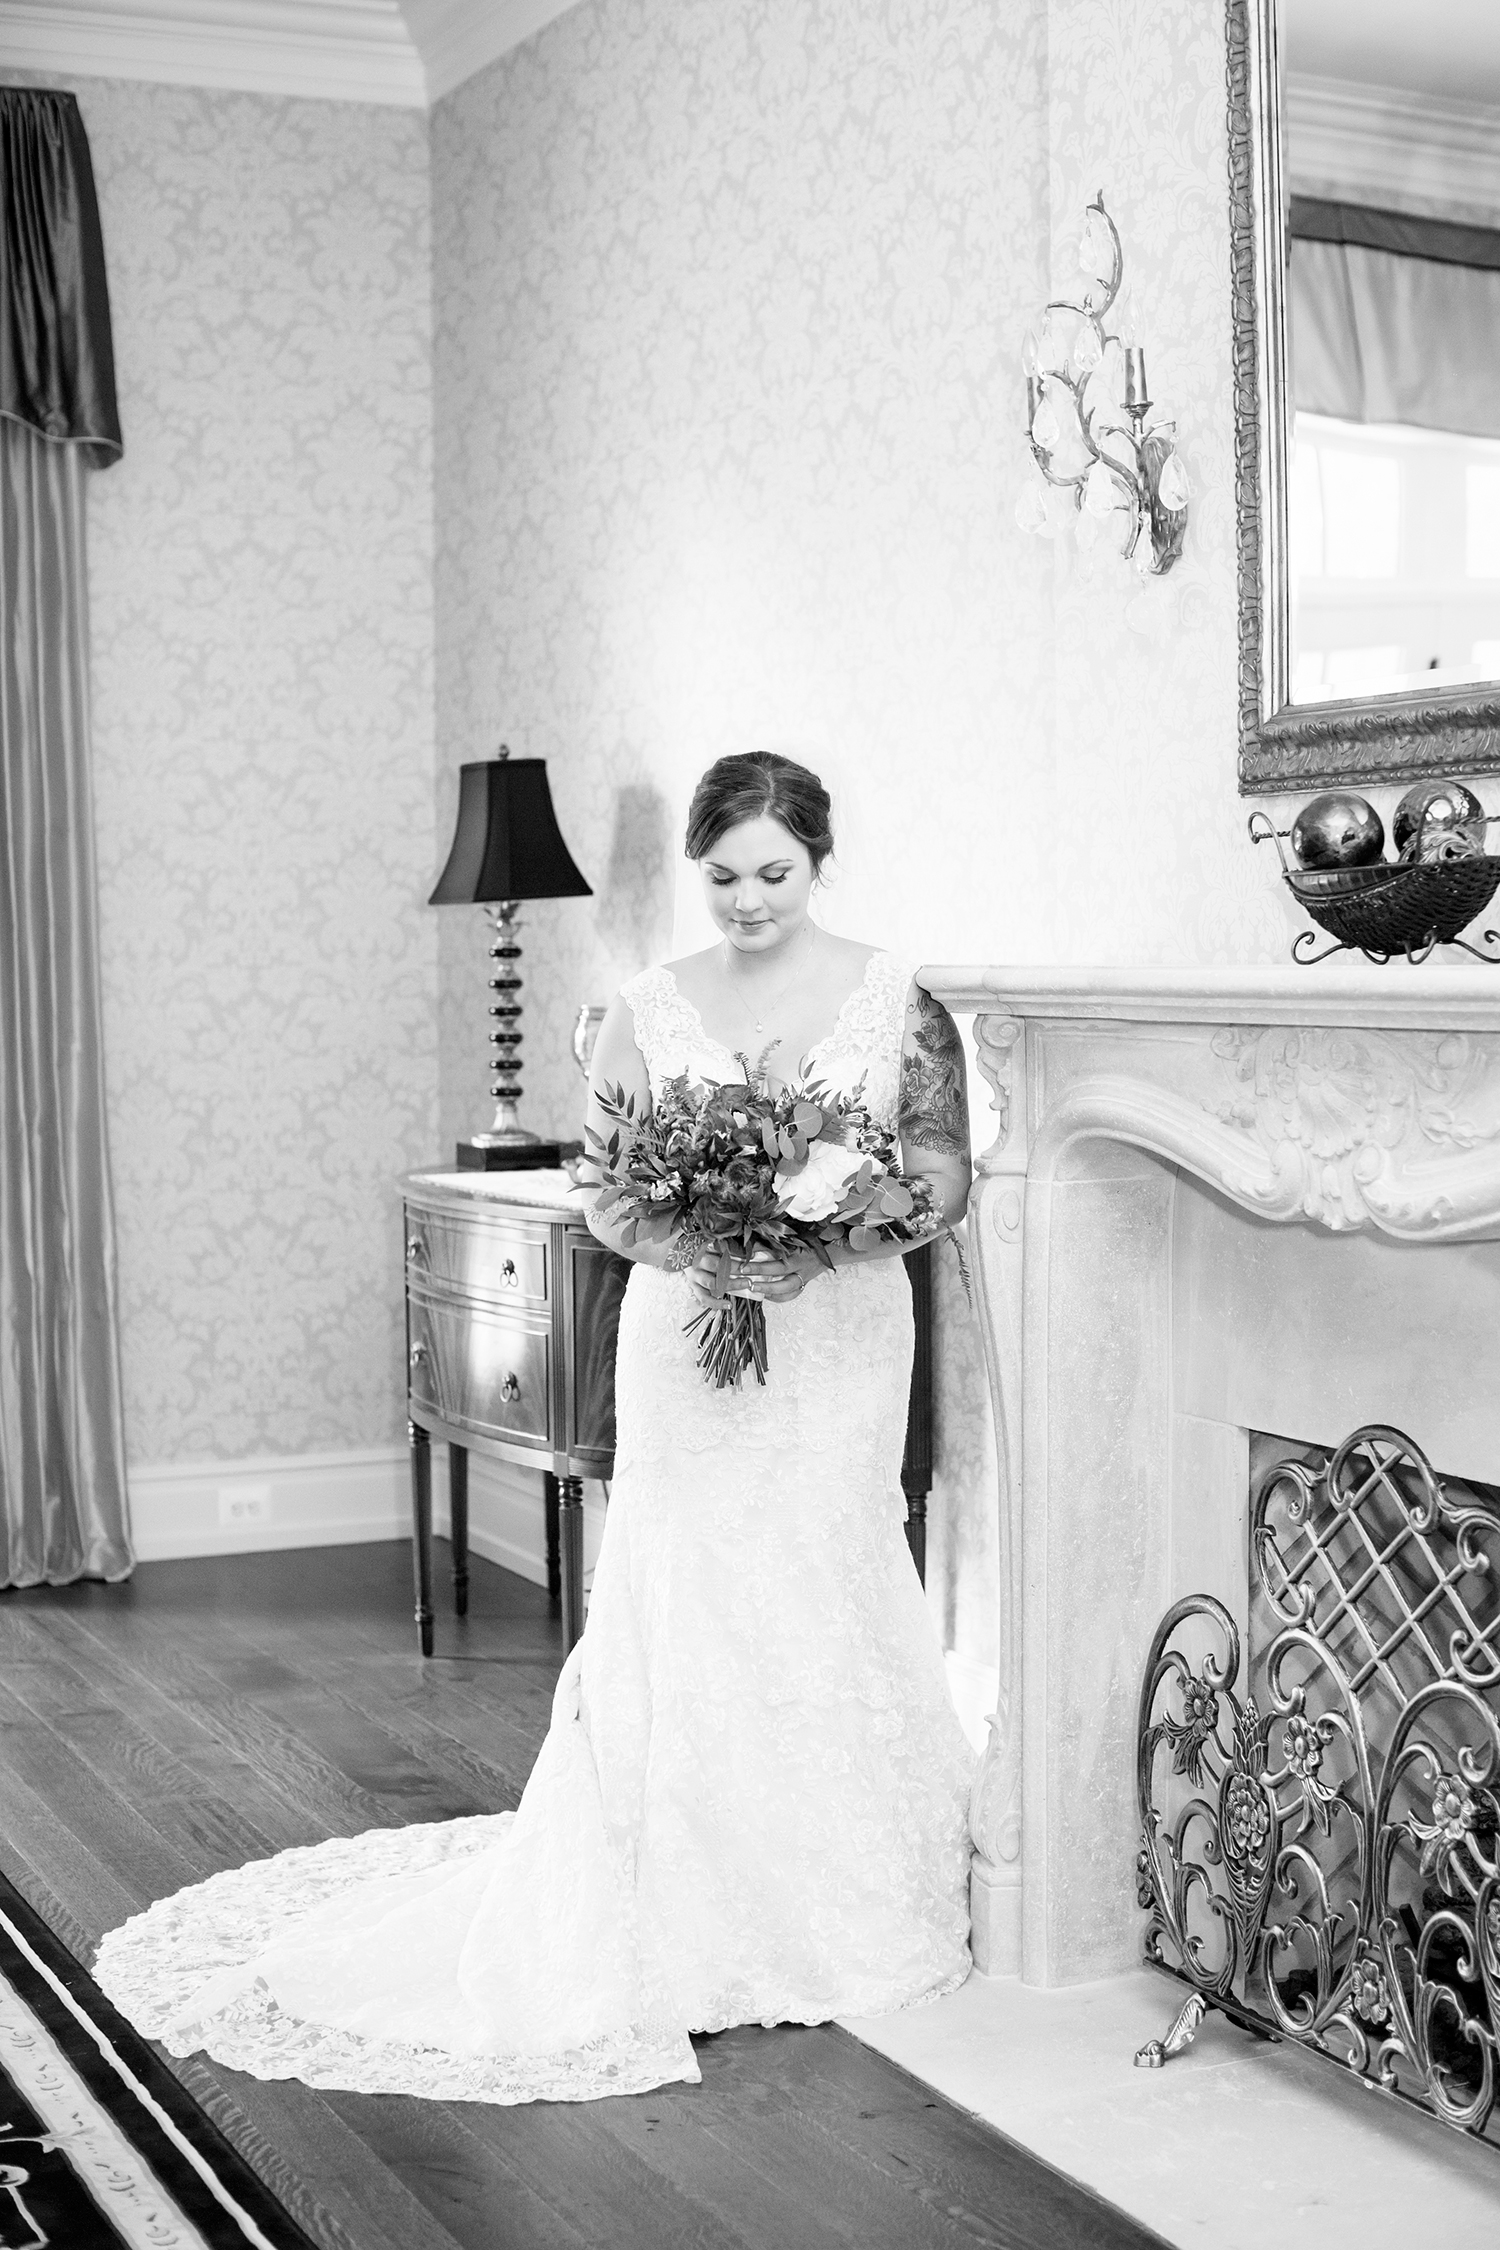 Abbys At Home Bridal Portraits - Image Property of www.j-dphoto.com